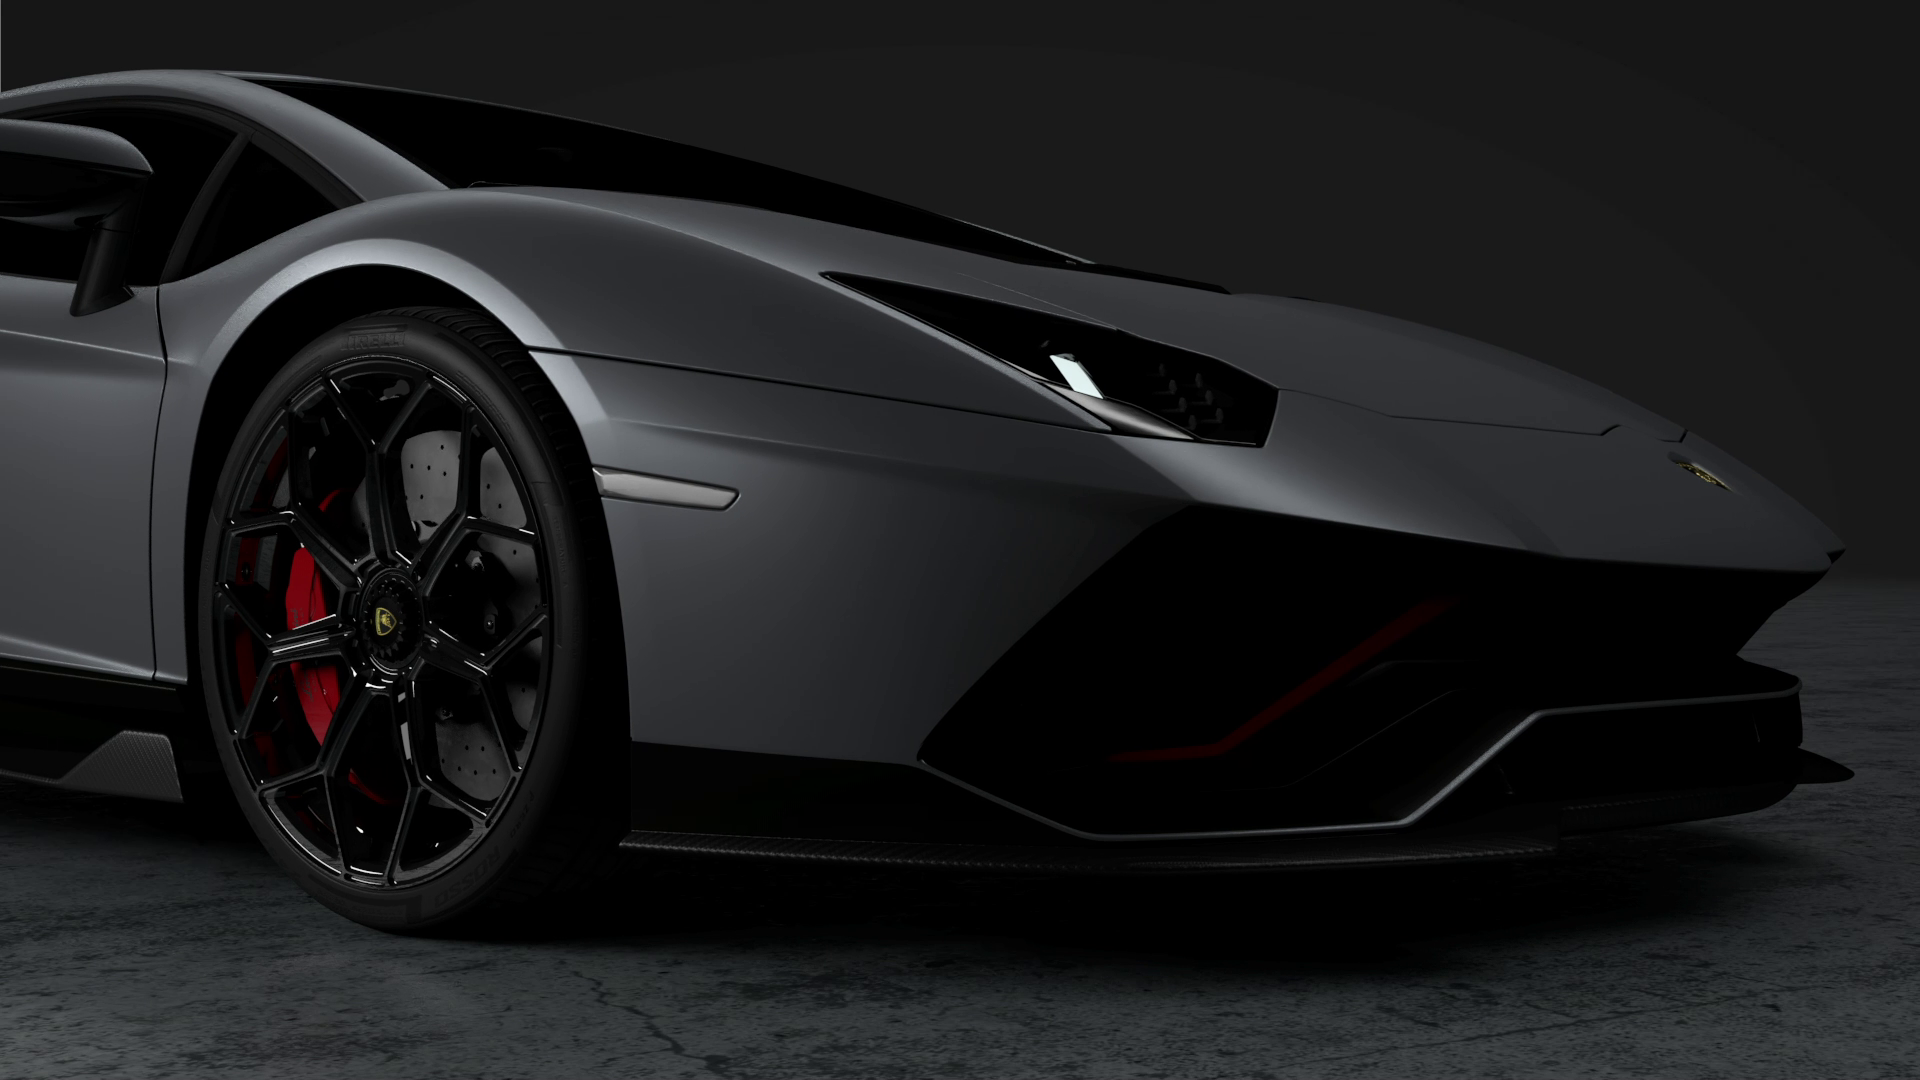 2022 Lamborghini Aventador LP 780-4 Ultimae Is the Last of Its Kind